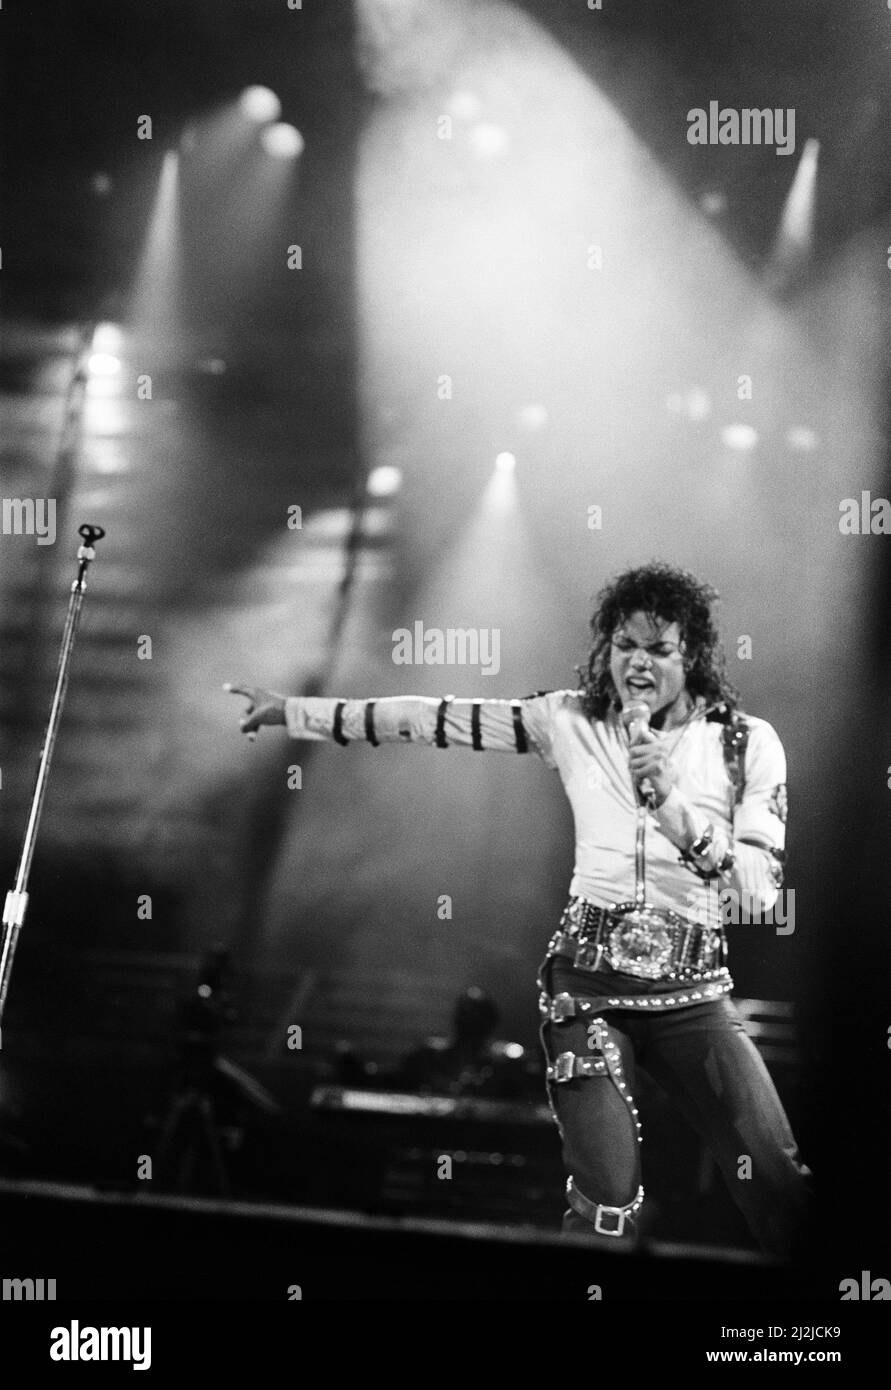 Michael Jackson, Bad Tour 1988, concert at Aintree Racecourse, Aintree, Merseyside, England, 11th September 1988. Stock Photo